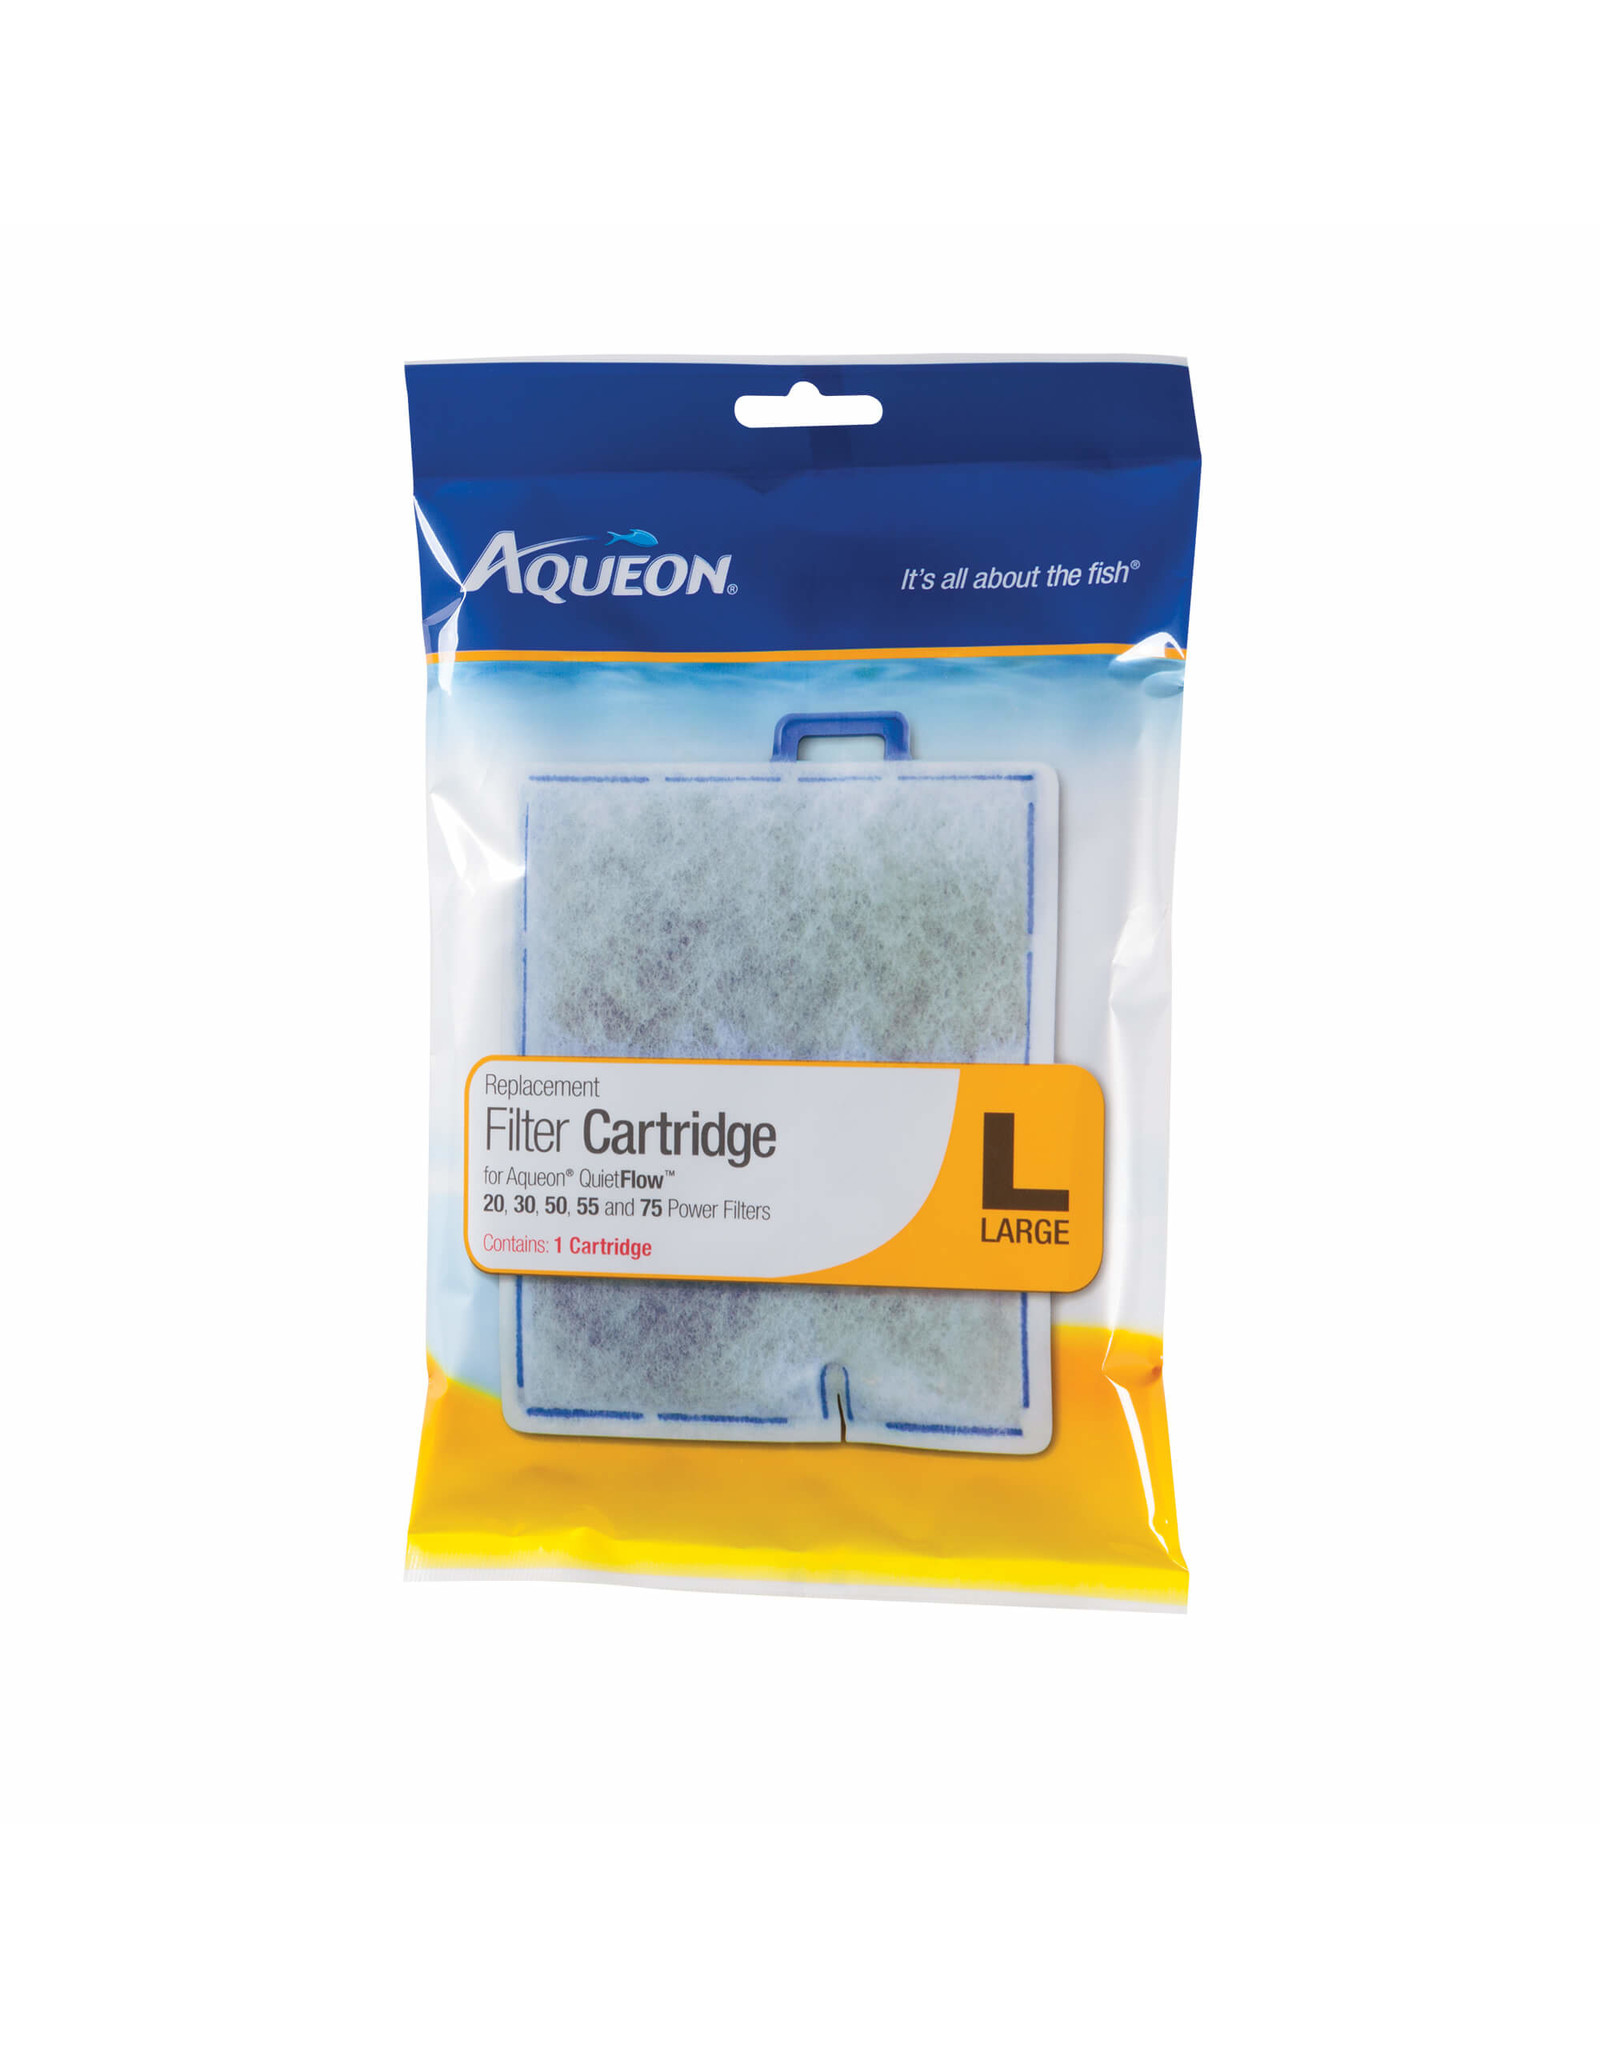 Aqueon AQUEON Filter Cartridge Large